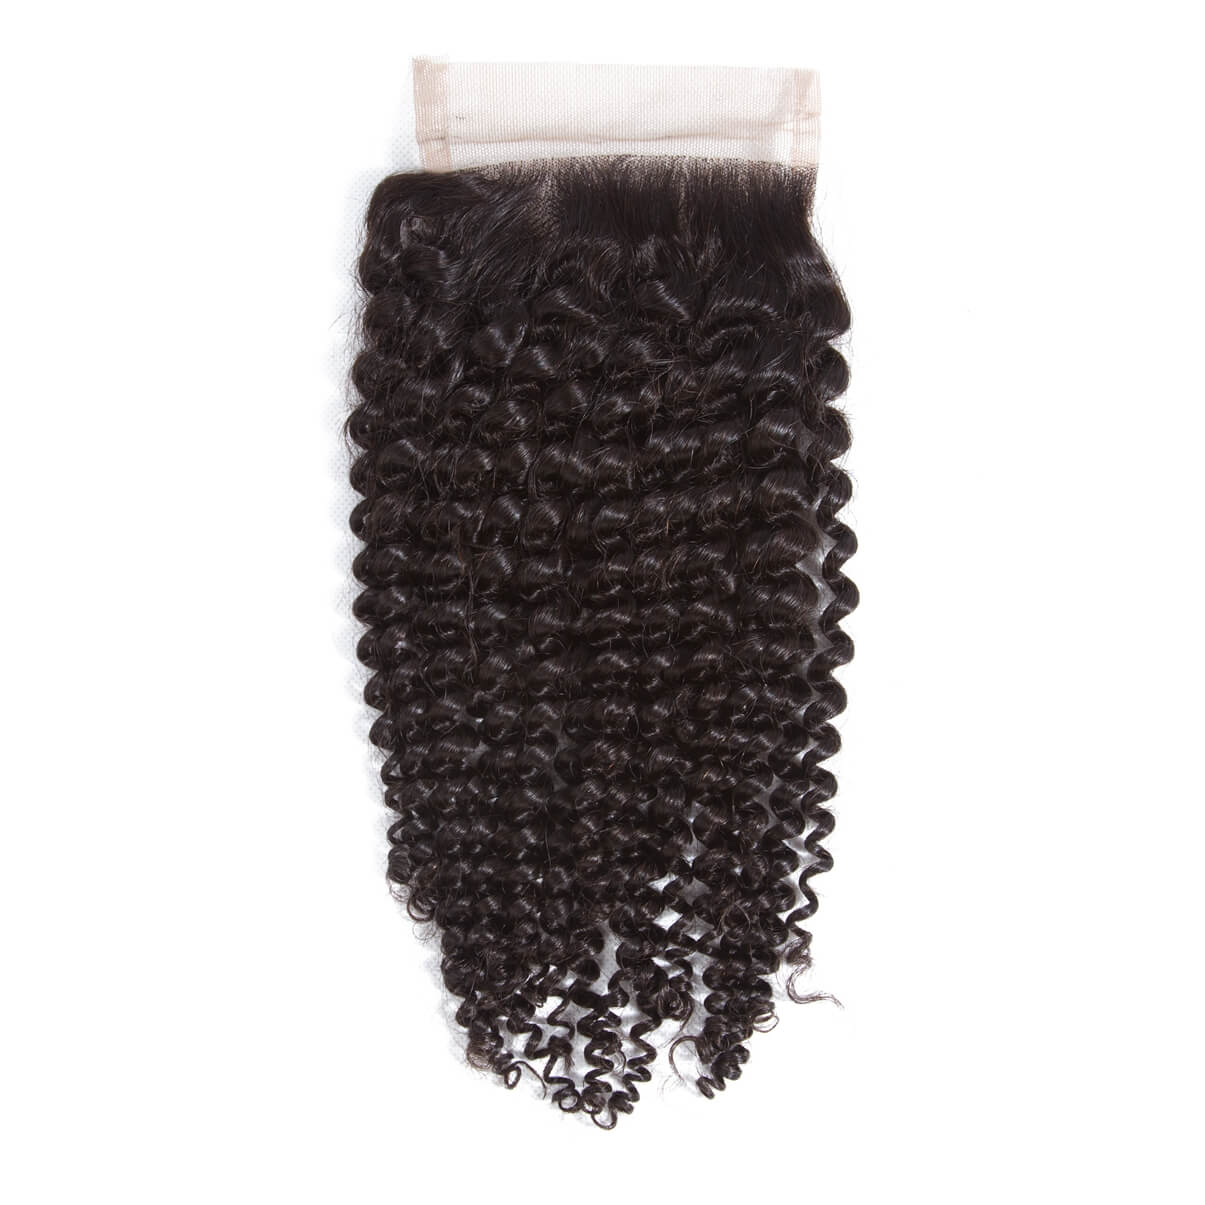 Lakihair 8A Brazilian Human Hair 4 Bundles Kinky Curly Hair Bundles With Lace Closure 4x4